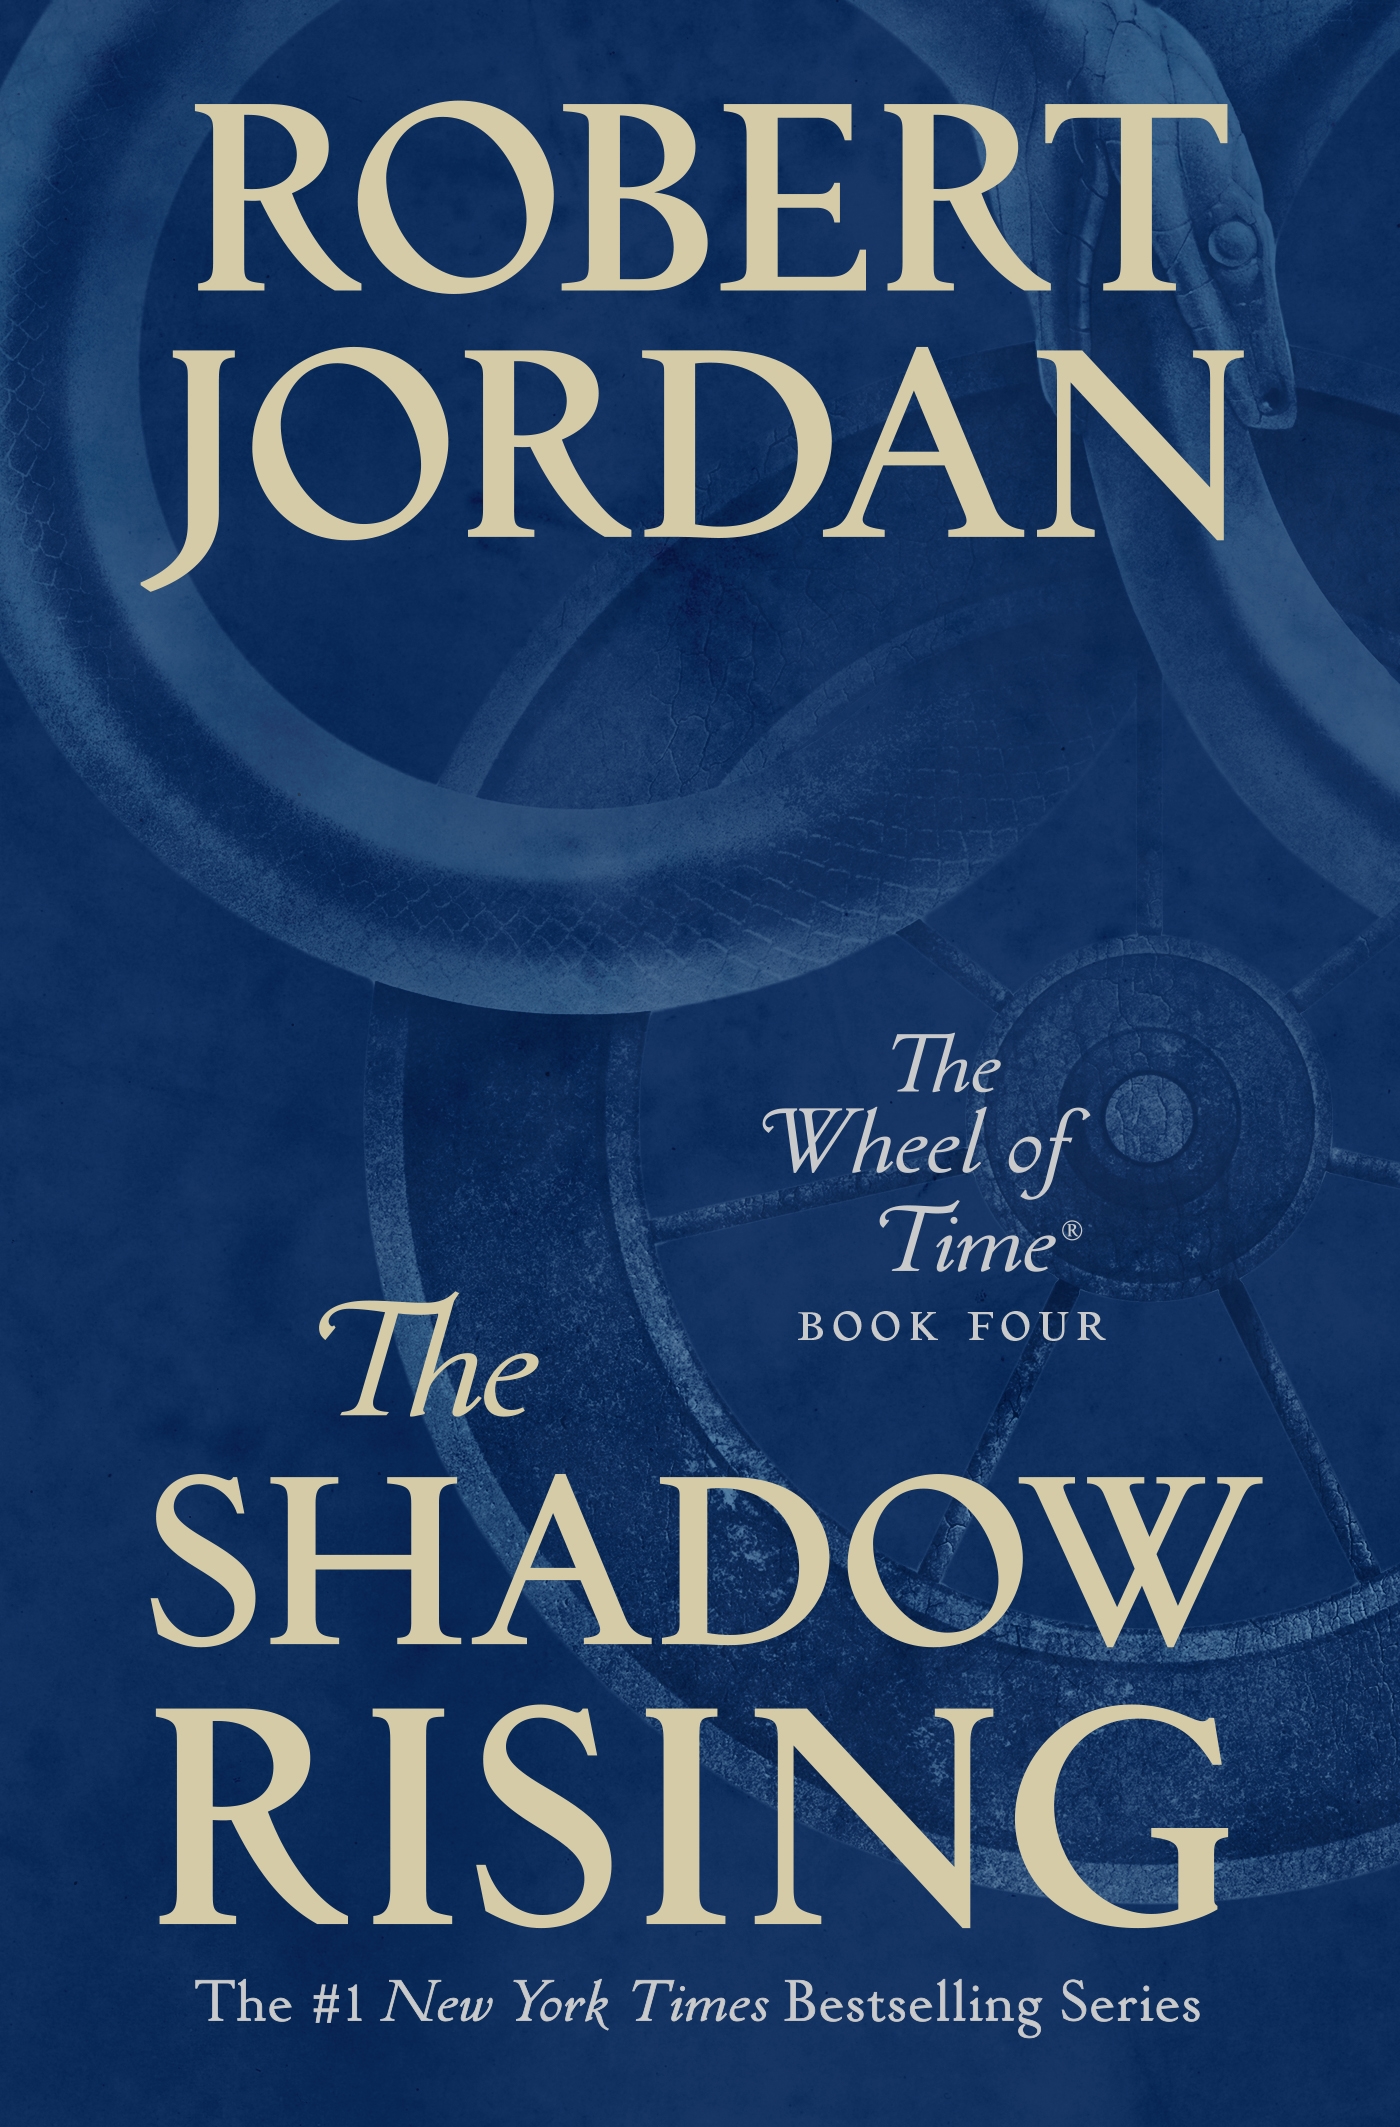 Book “The Shadow Rising” by Robert Jordan — December 31, 2019